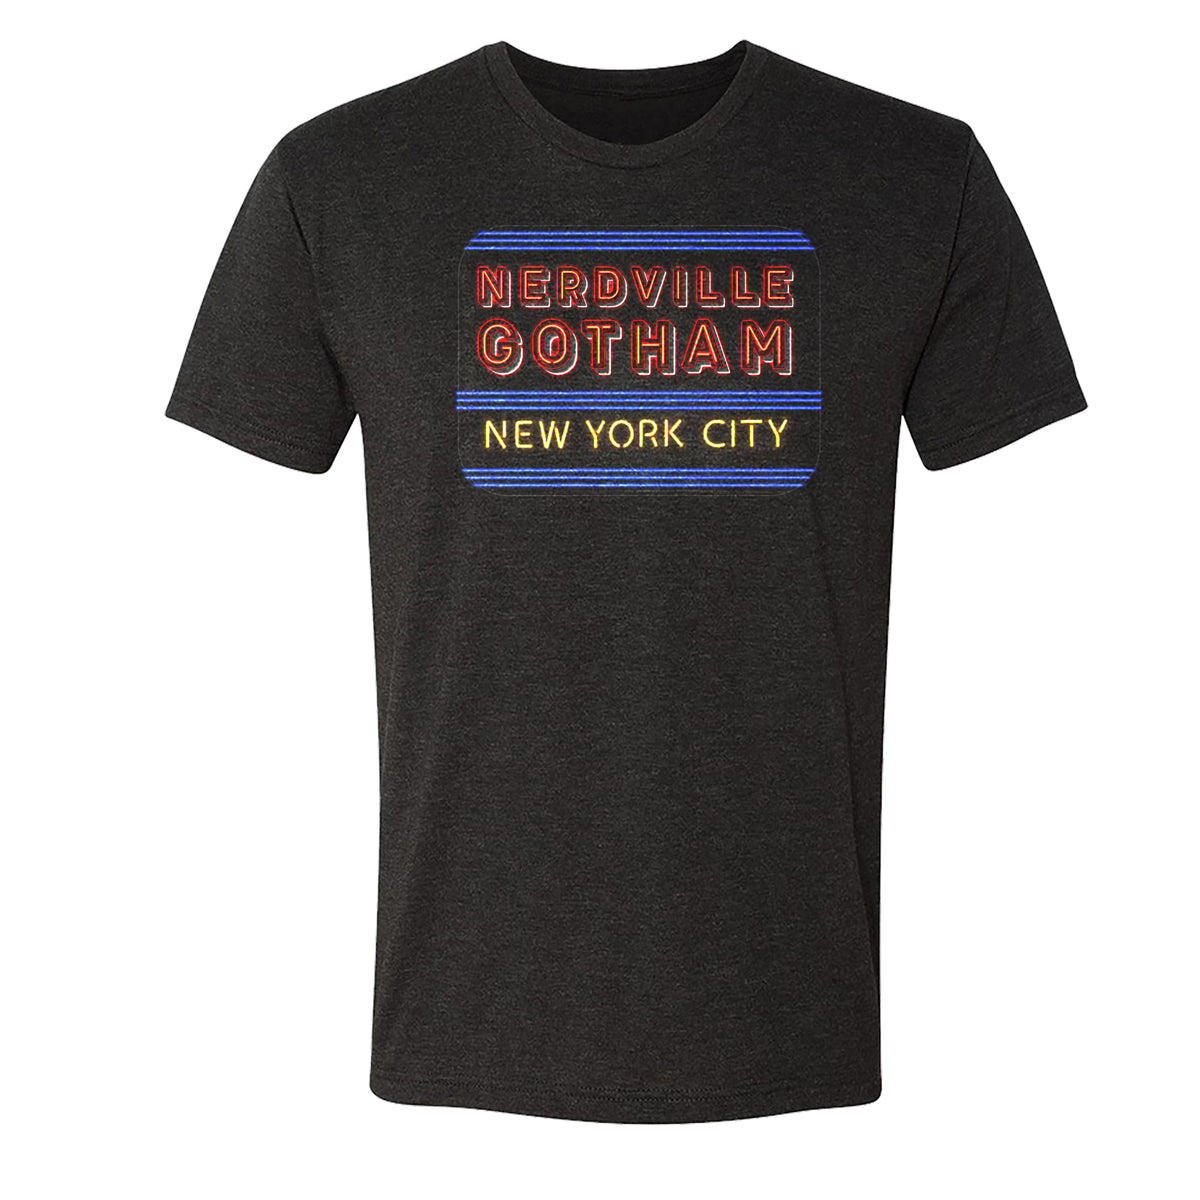 Nerdville Gotham T-Shirt Tri-Blend (Unisex) - Vintage Black